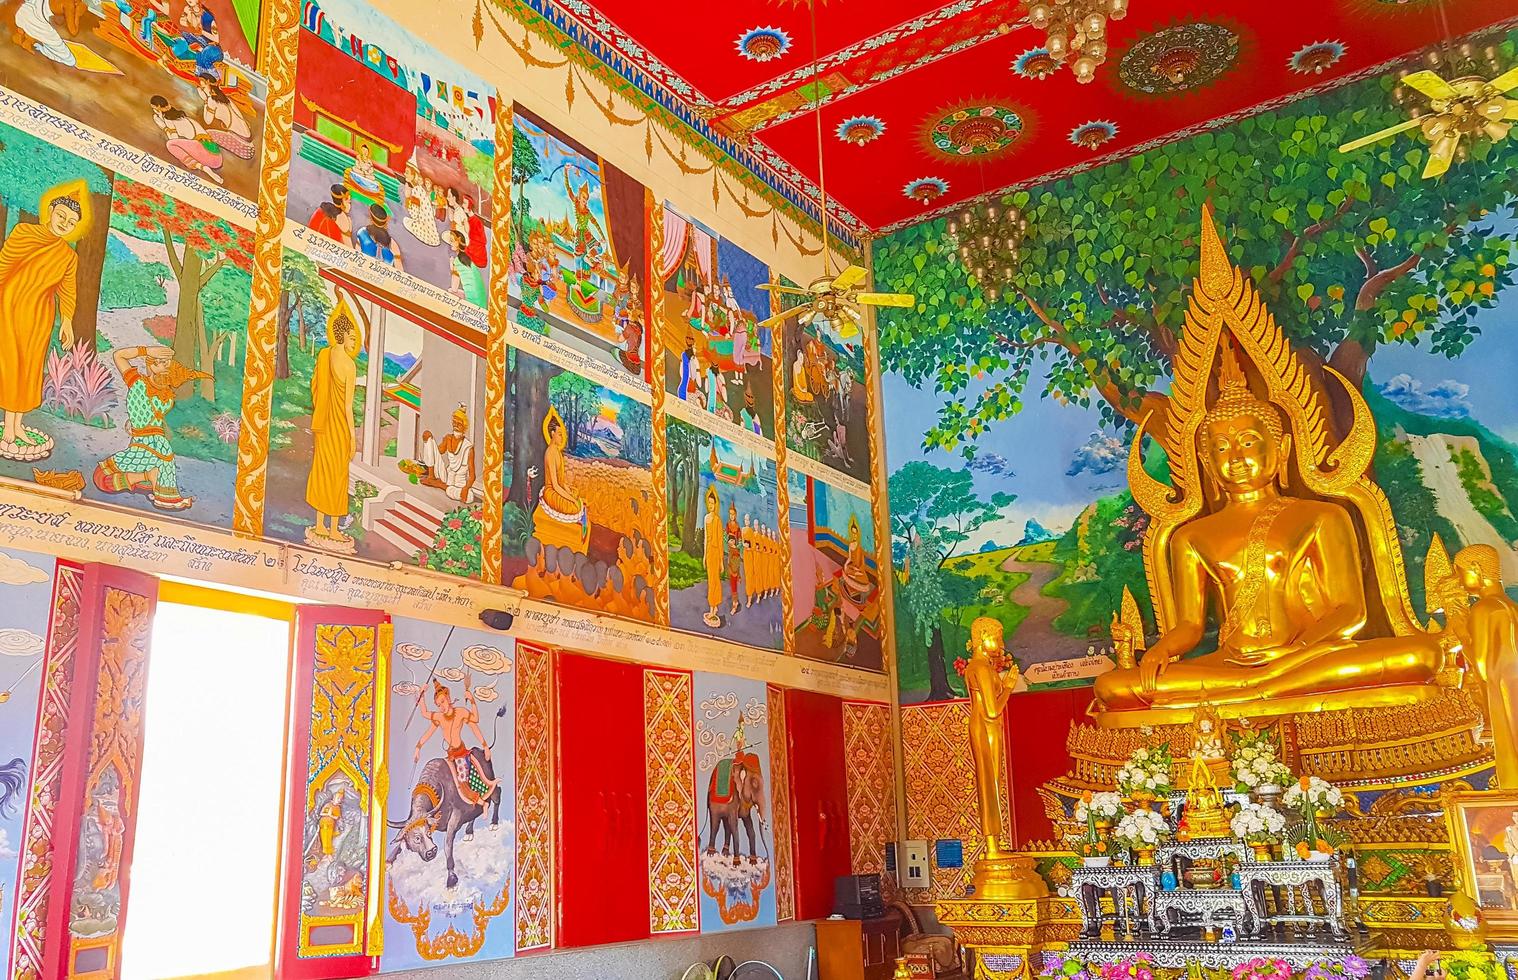 Koh Samui, Thailand, 2021 - Golden buddha statue photo